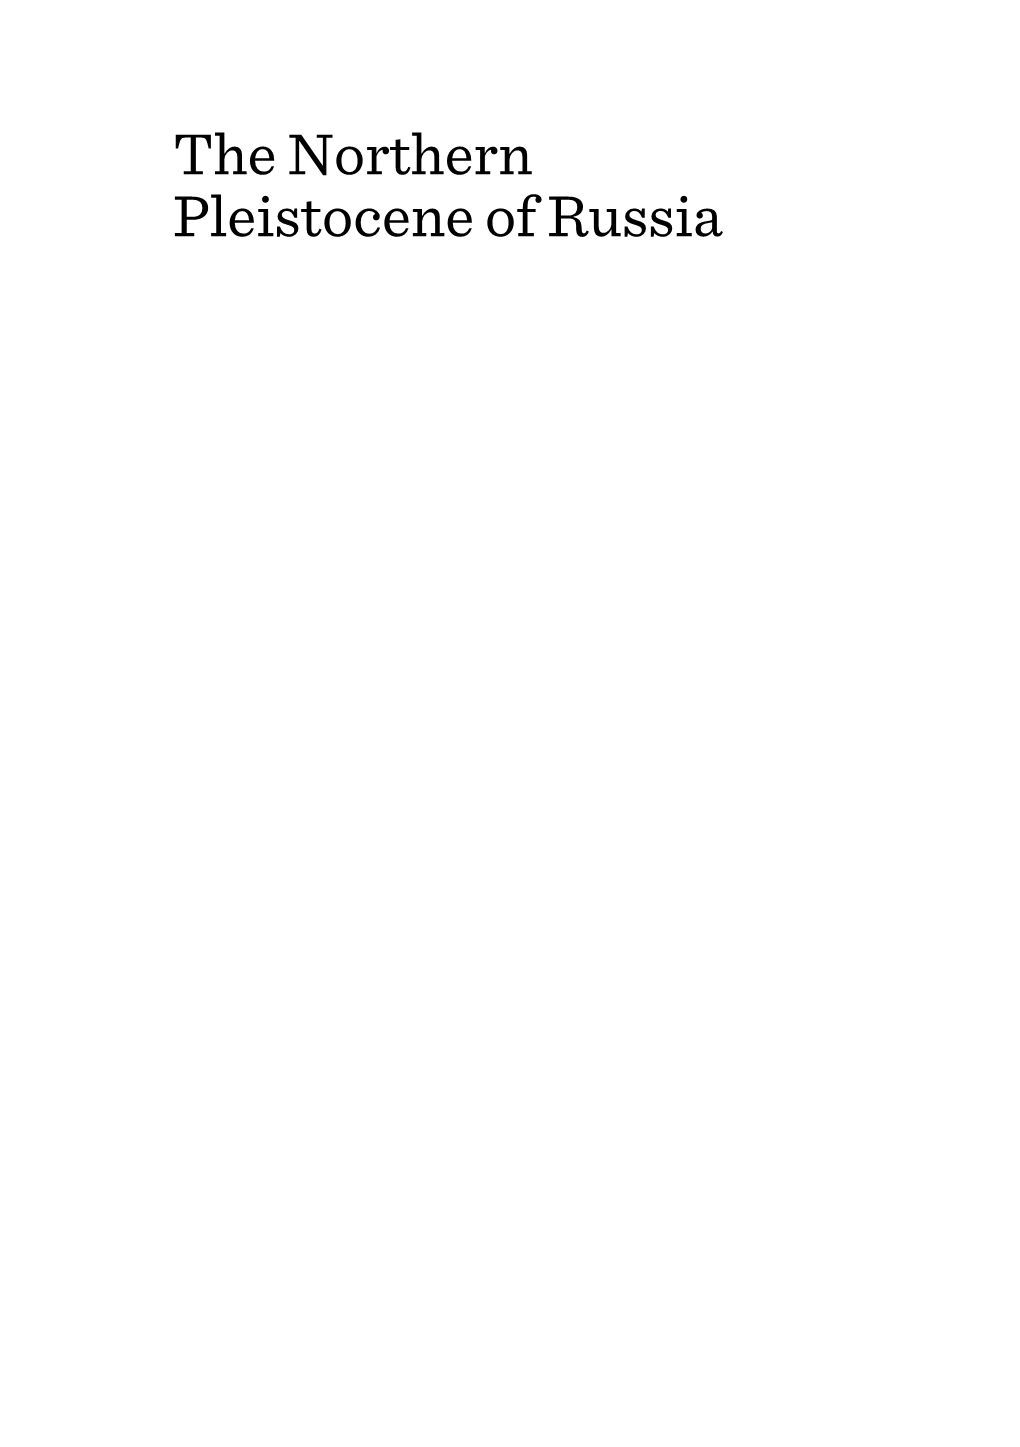 The Northern Pleistocene of Russia